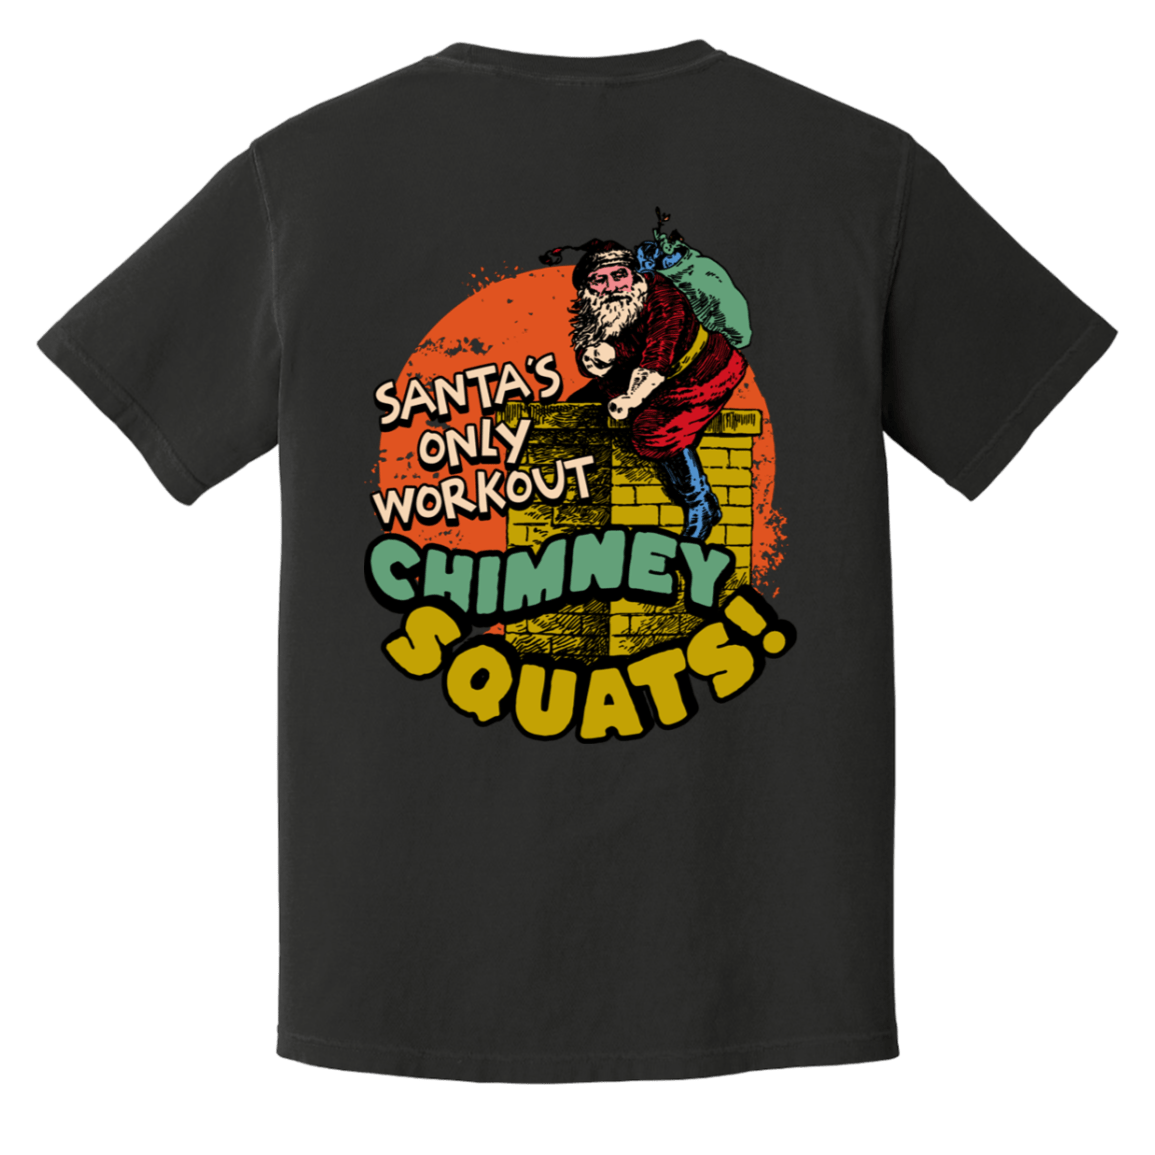 Chimney Squats Heavyweight Gym Tees - T-Shirts